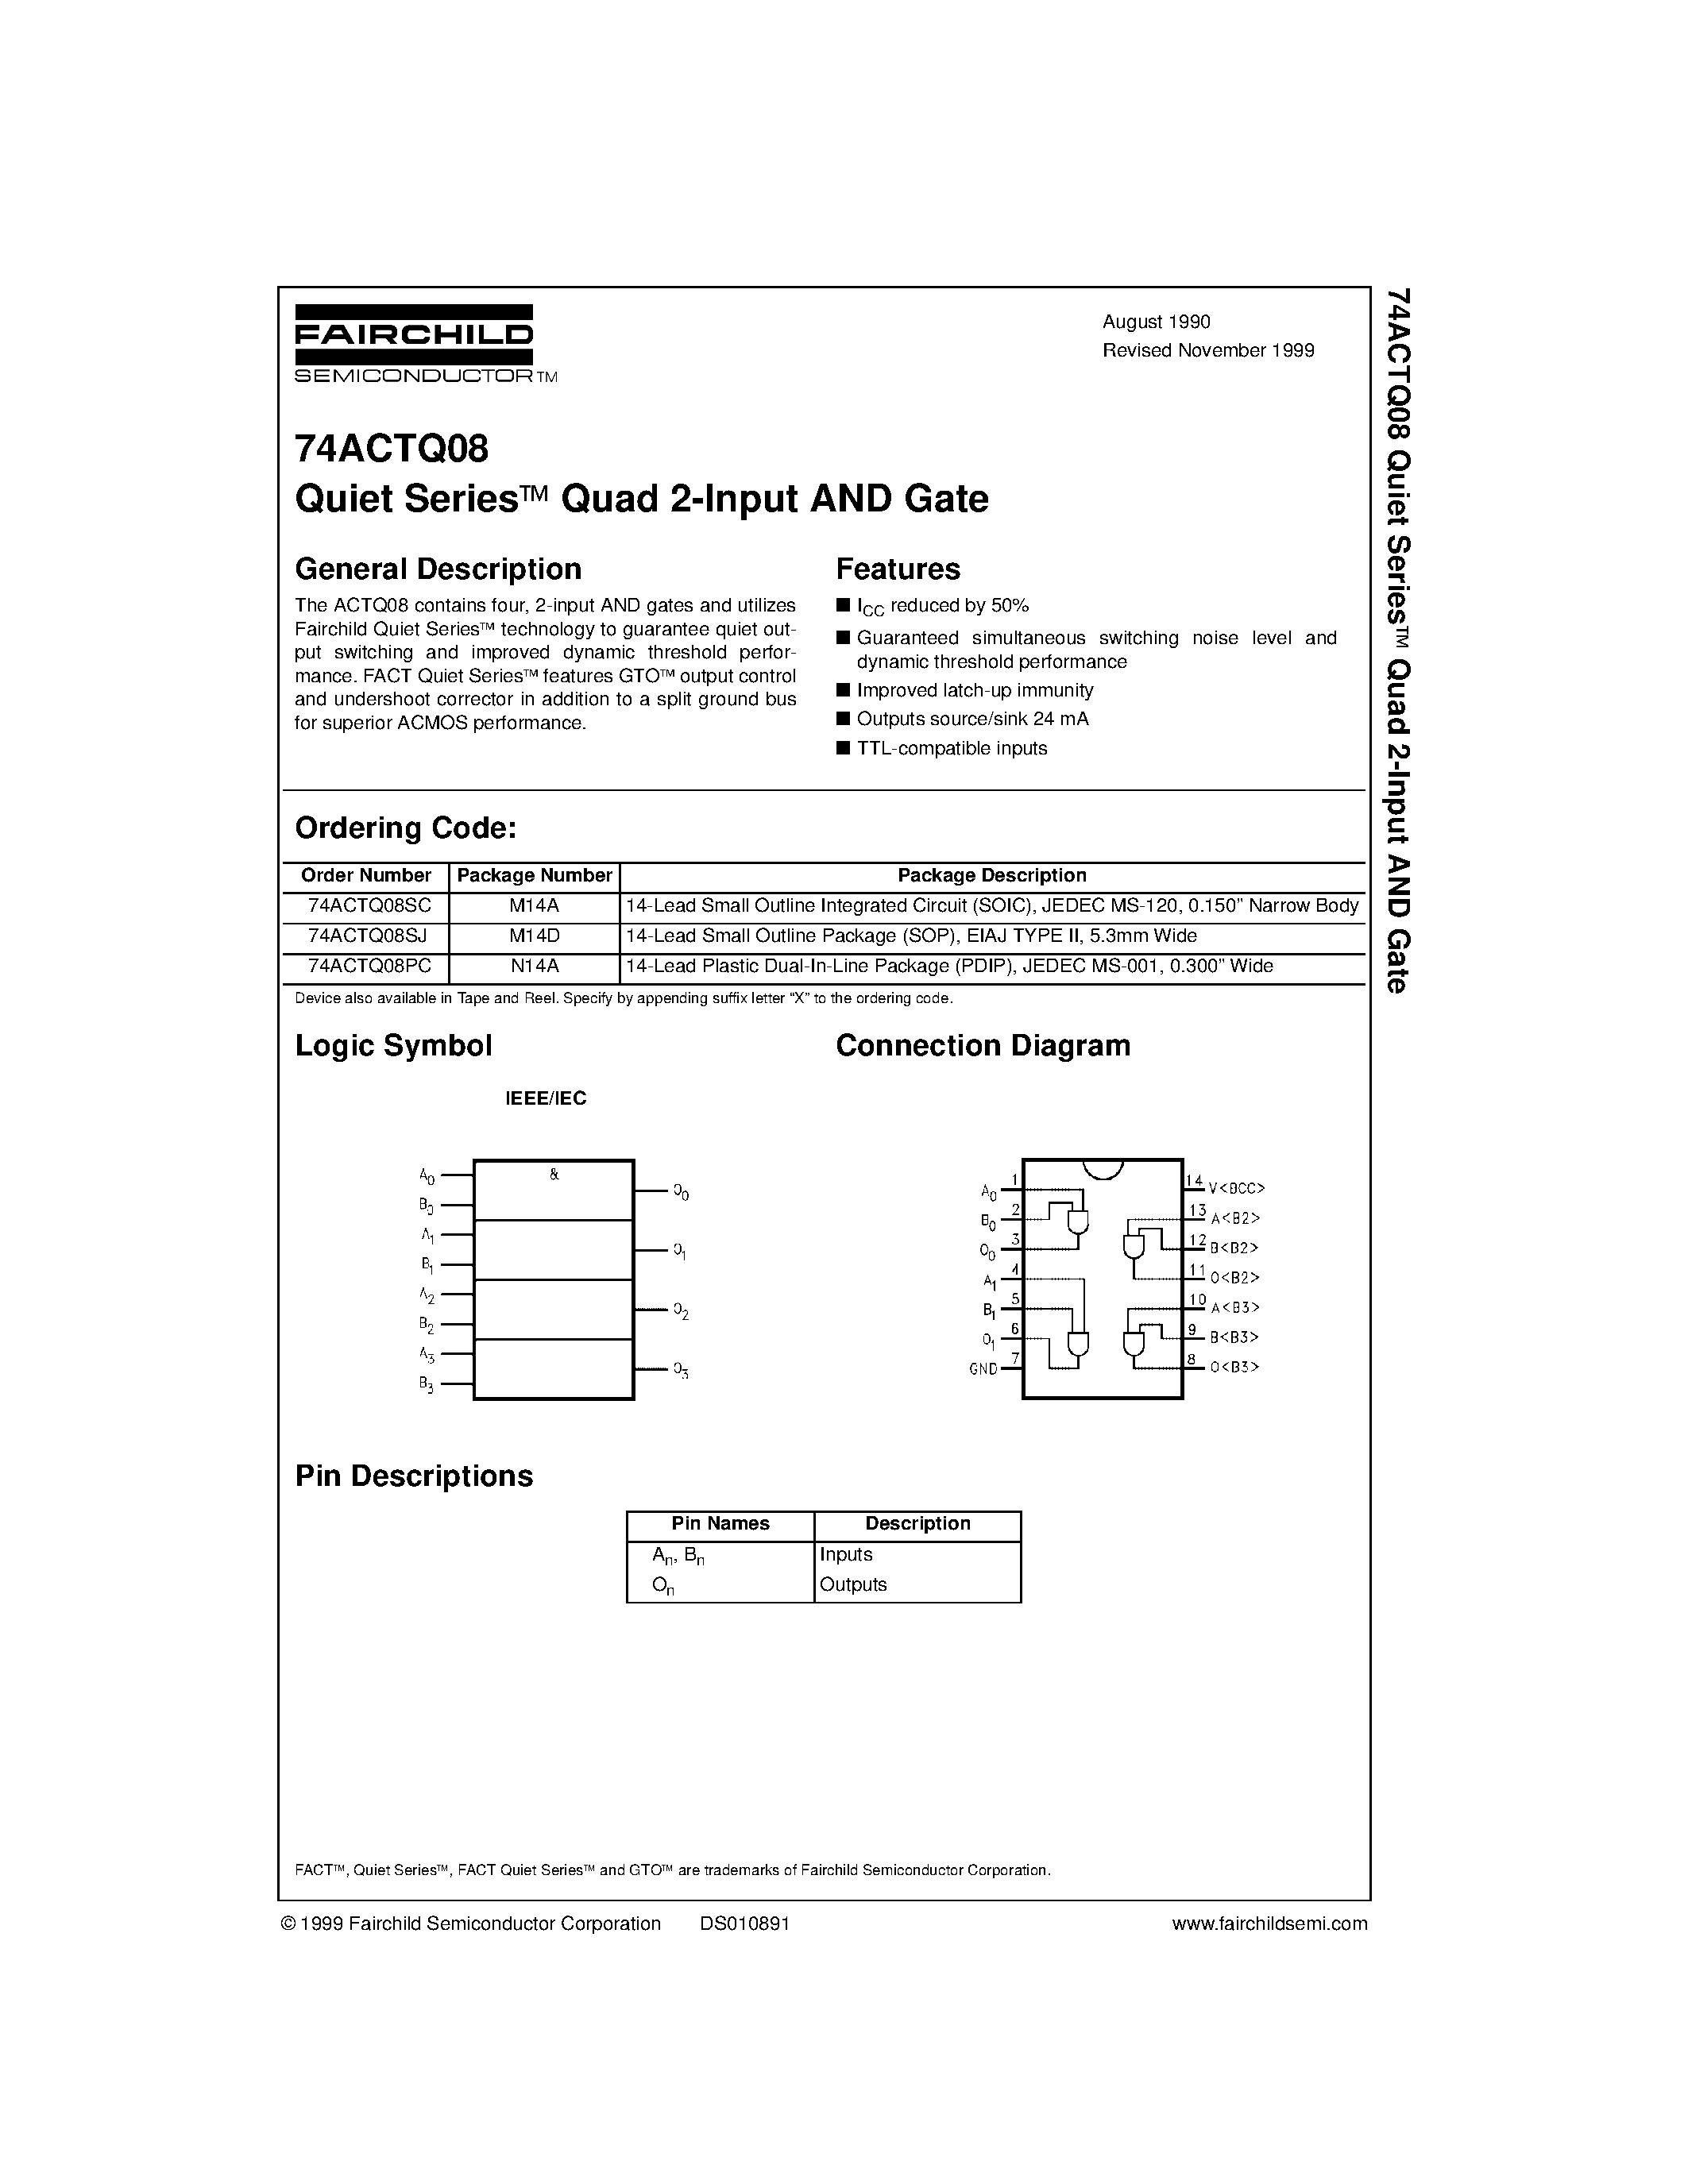 Datasheet 74ACTQ08PC - Quiet Series Quad 2-Input AND Gate page 1